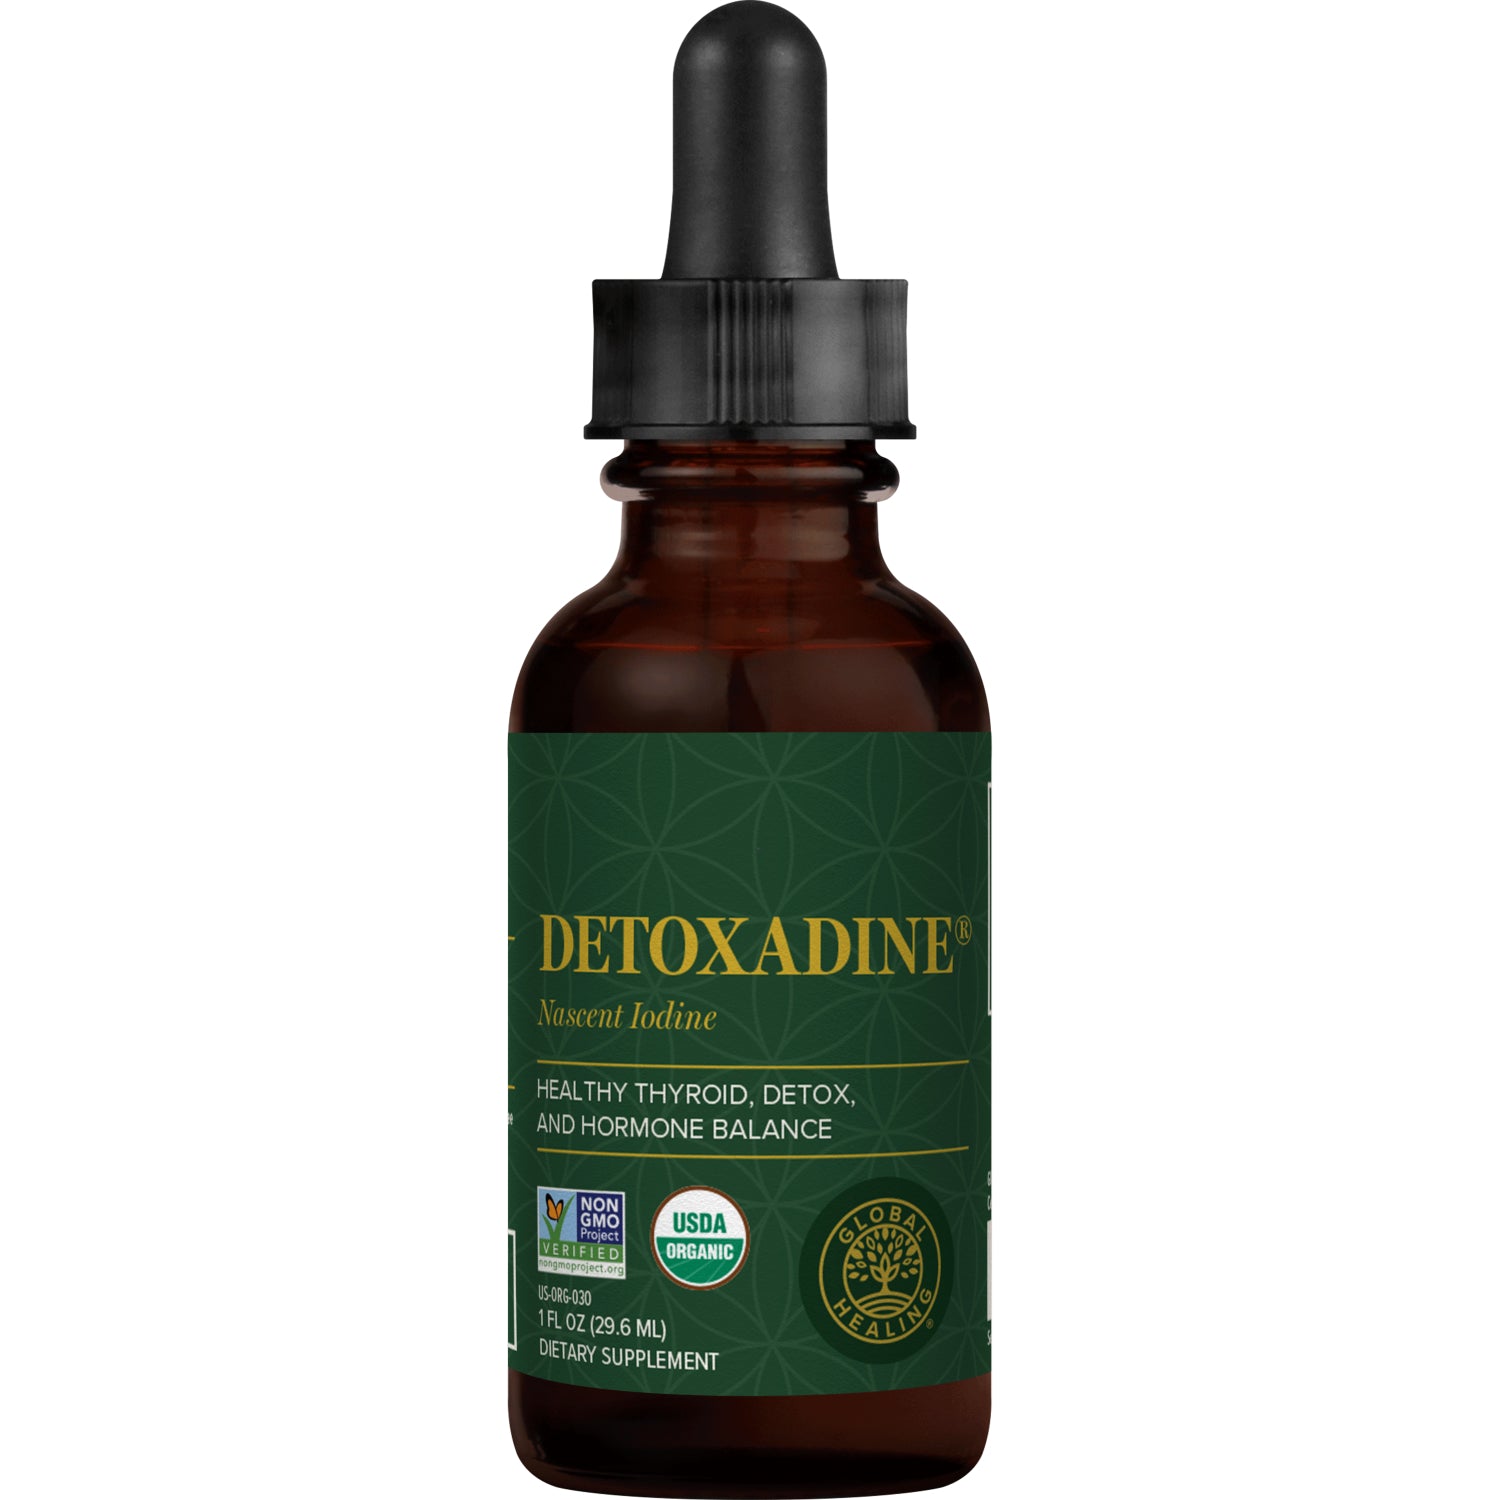 Global Healing Detoxadine Nacent Iodine Thyroid Support Bottle 1fl oz